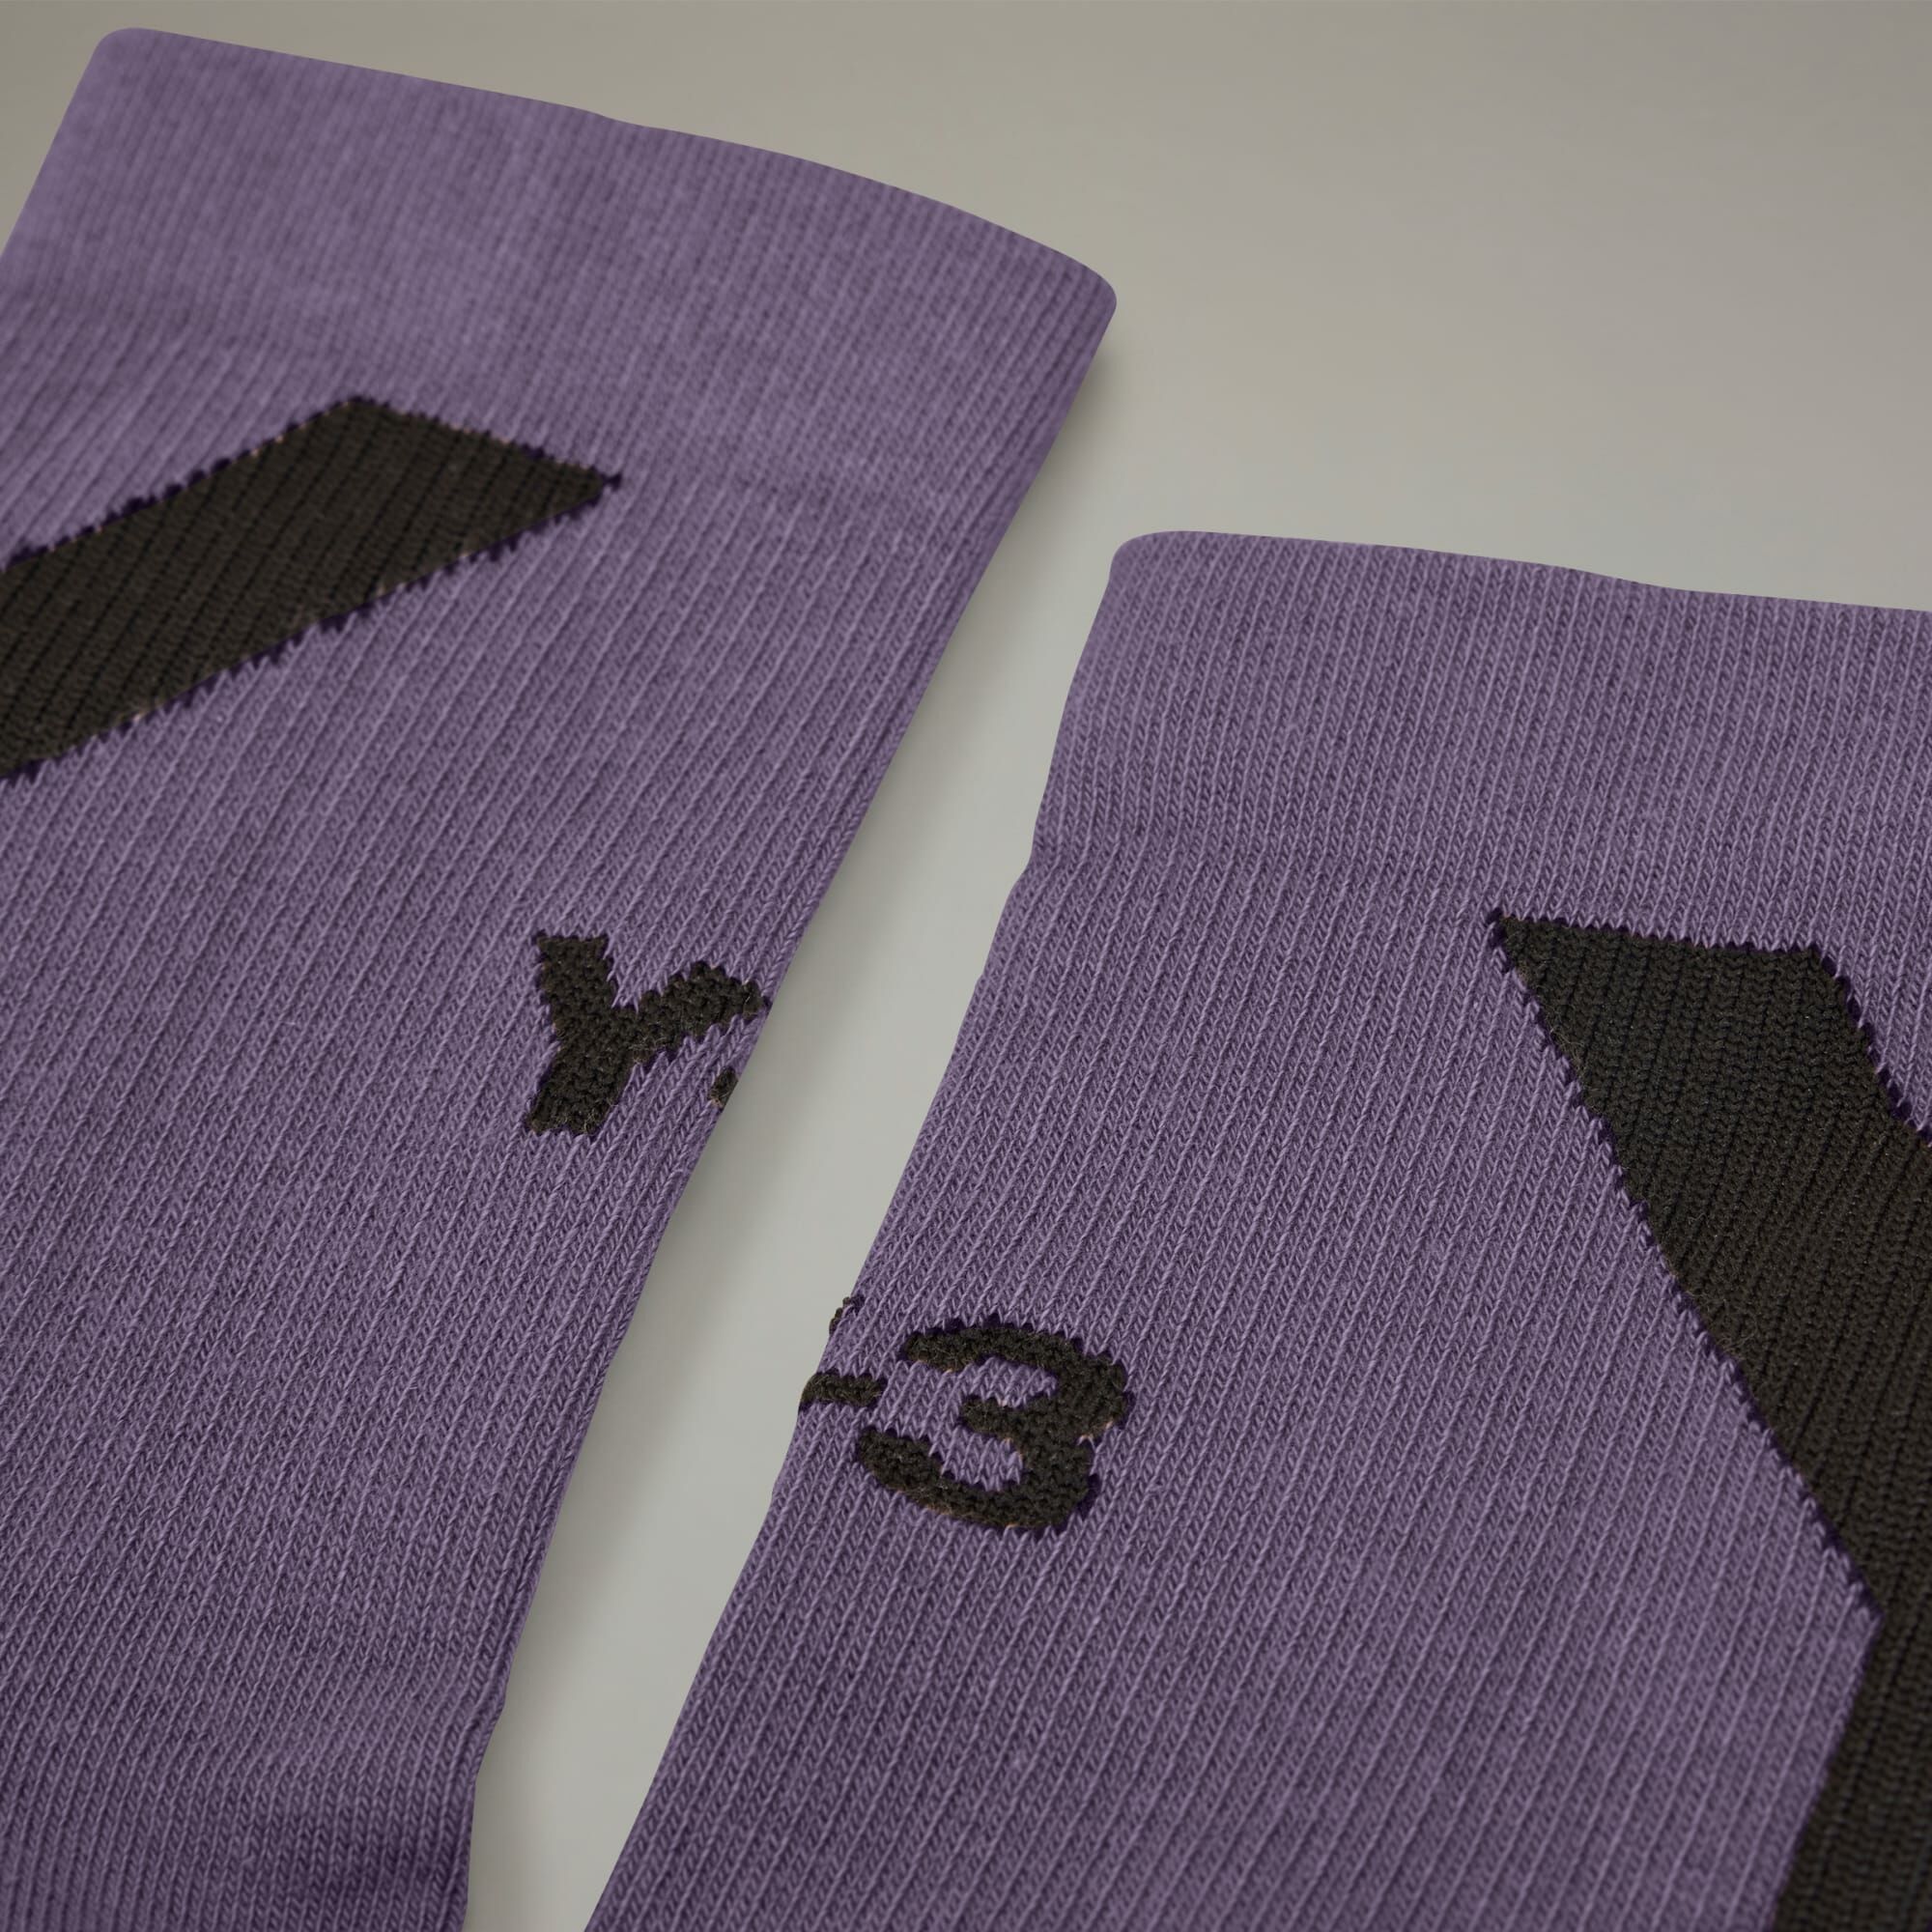 Y-3 SOCK HI 長襪- 紫】